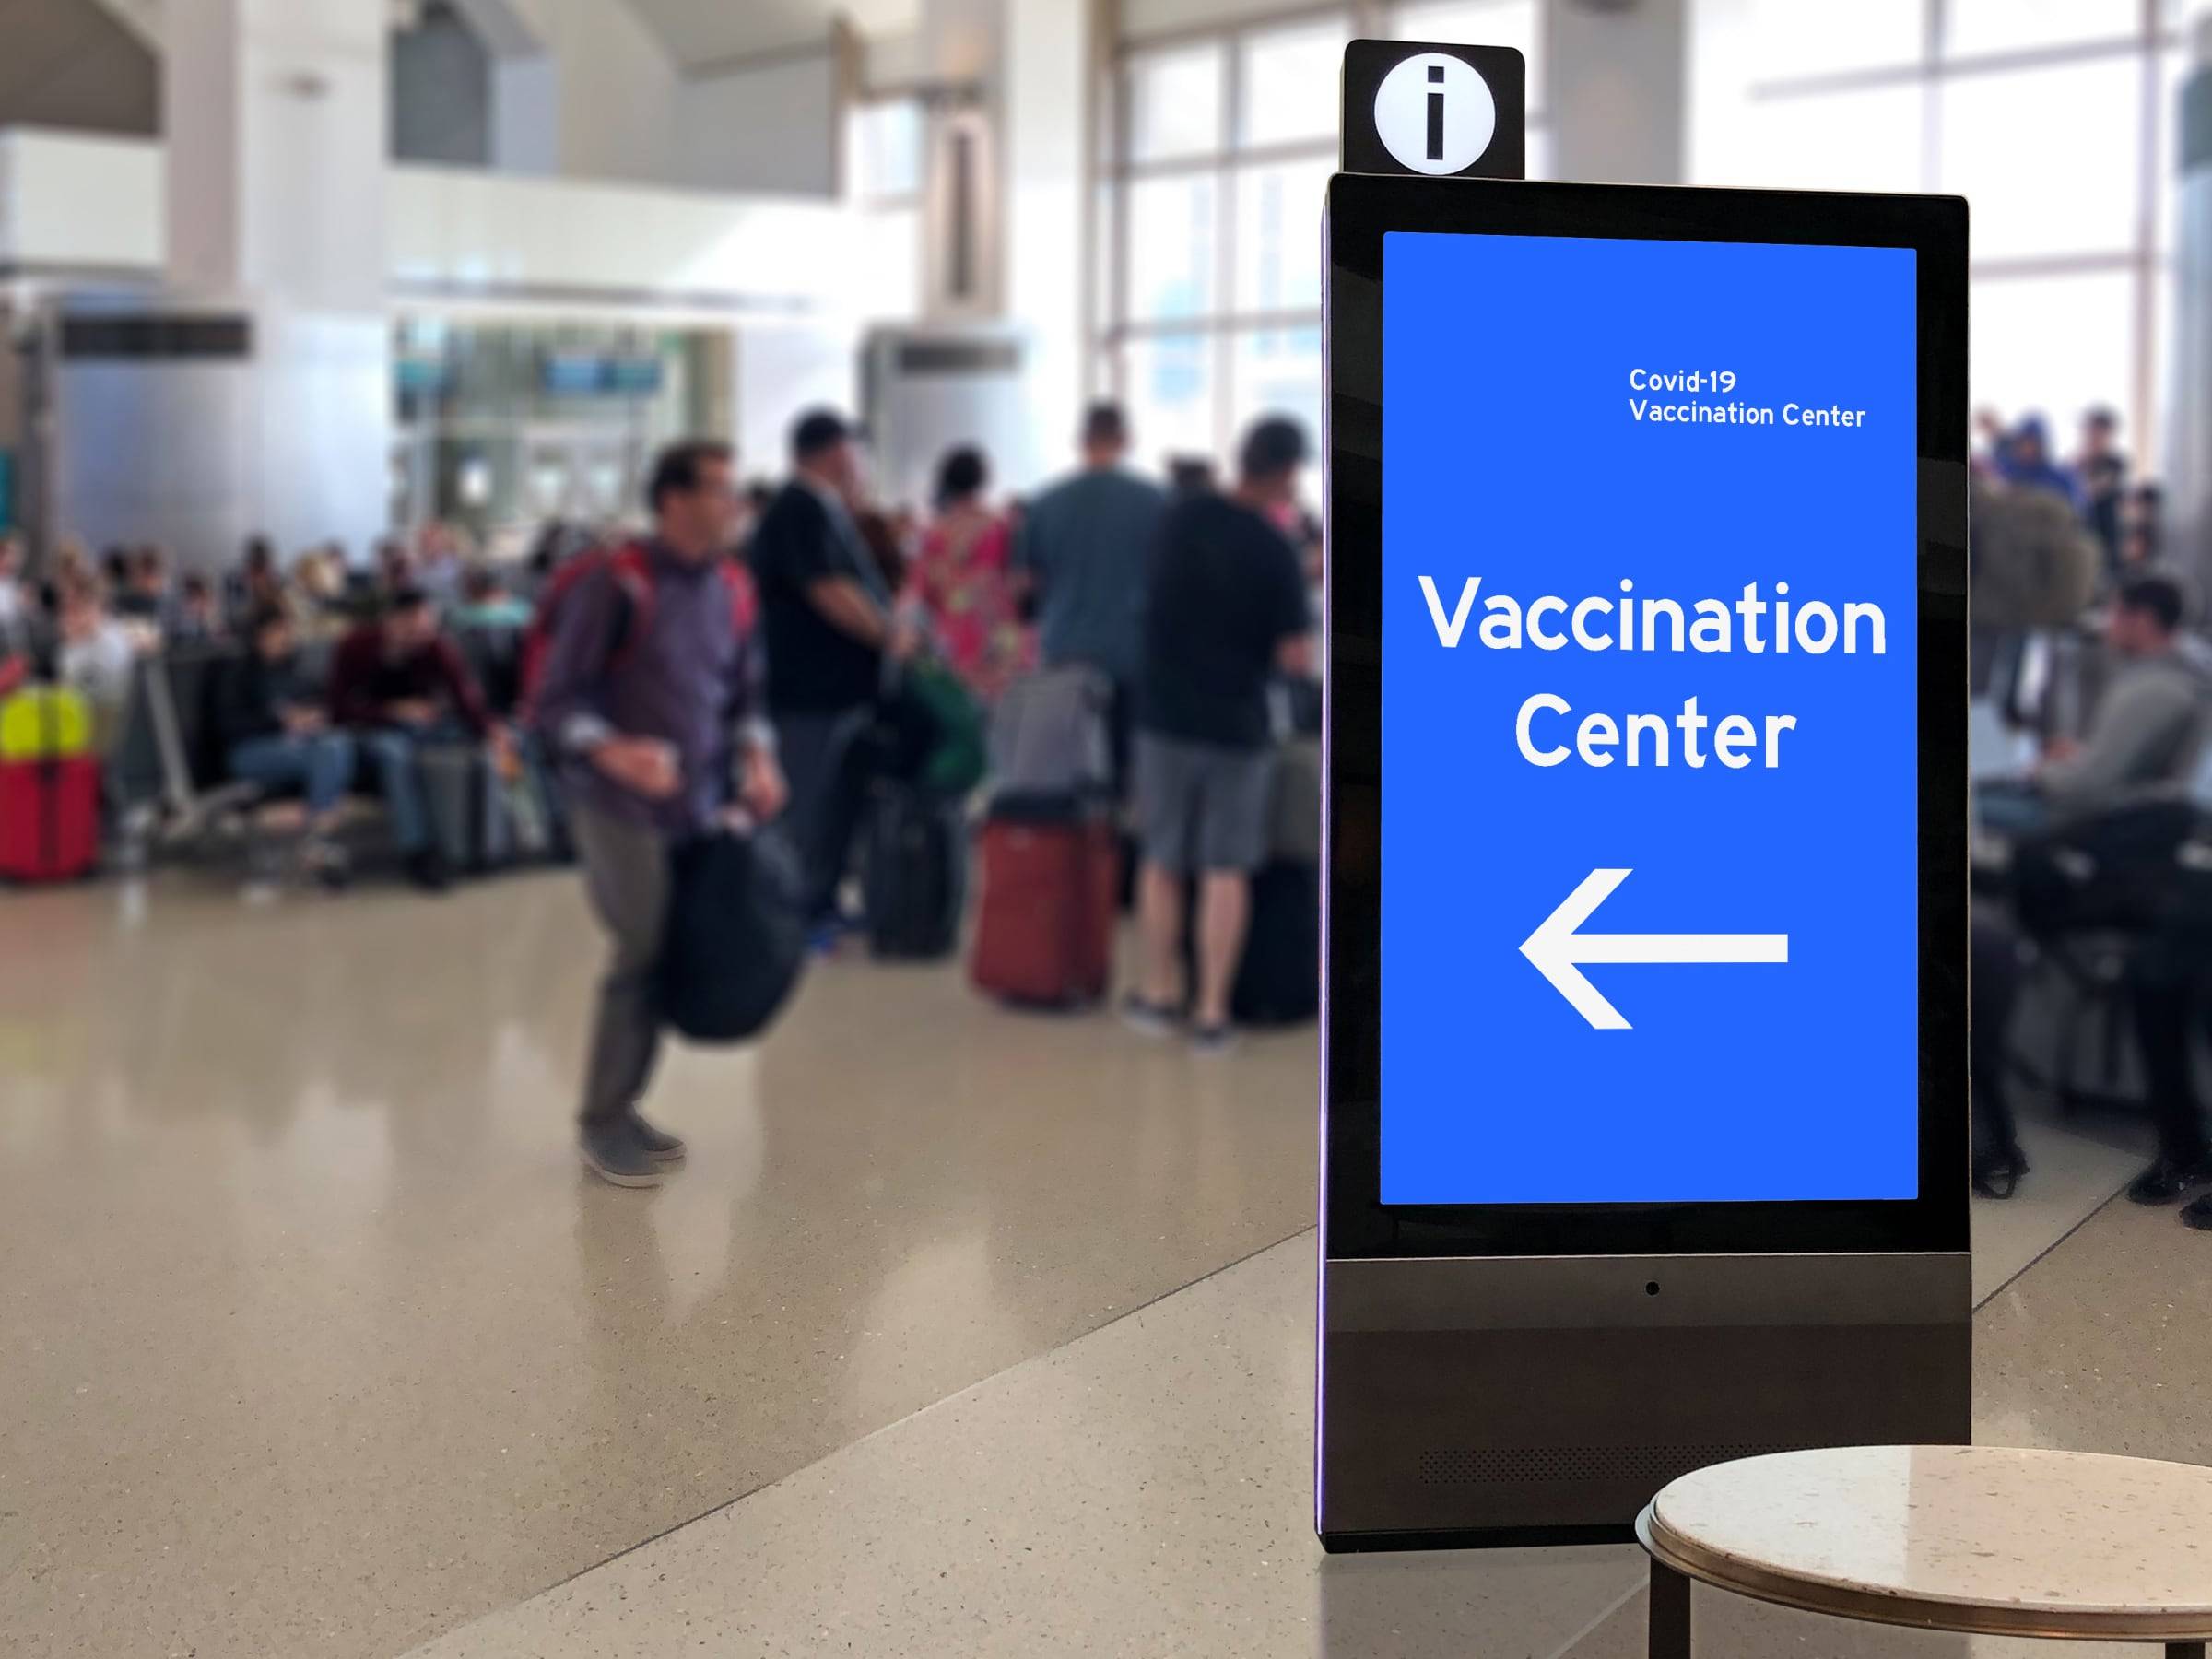 digital kiosk signage at a vaccination center.